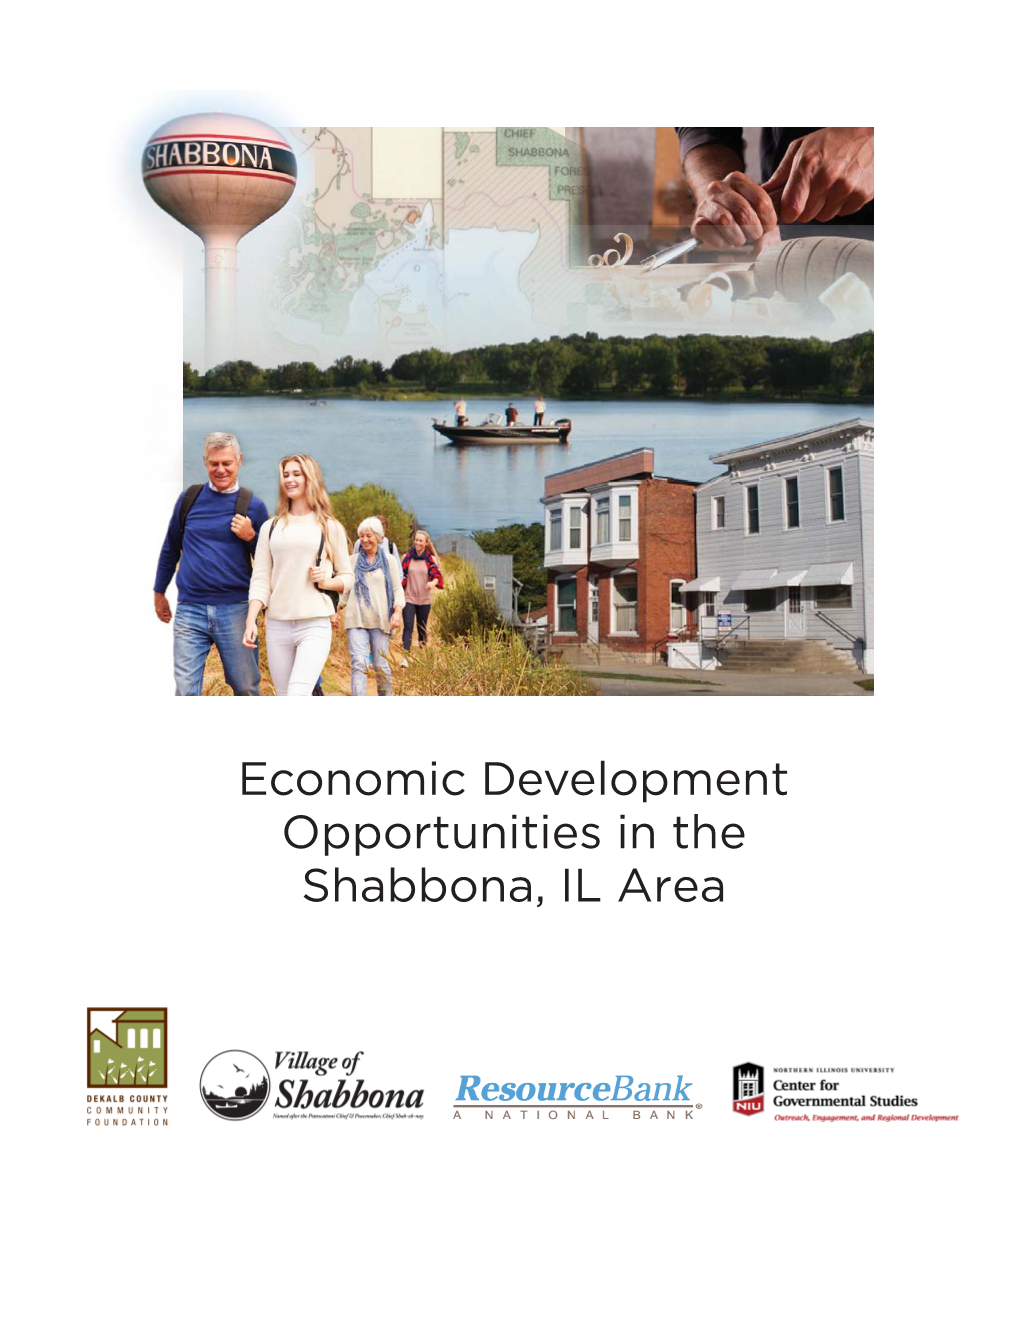 Economic Development Opportunities in Shabbona